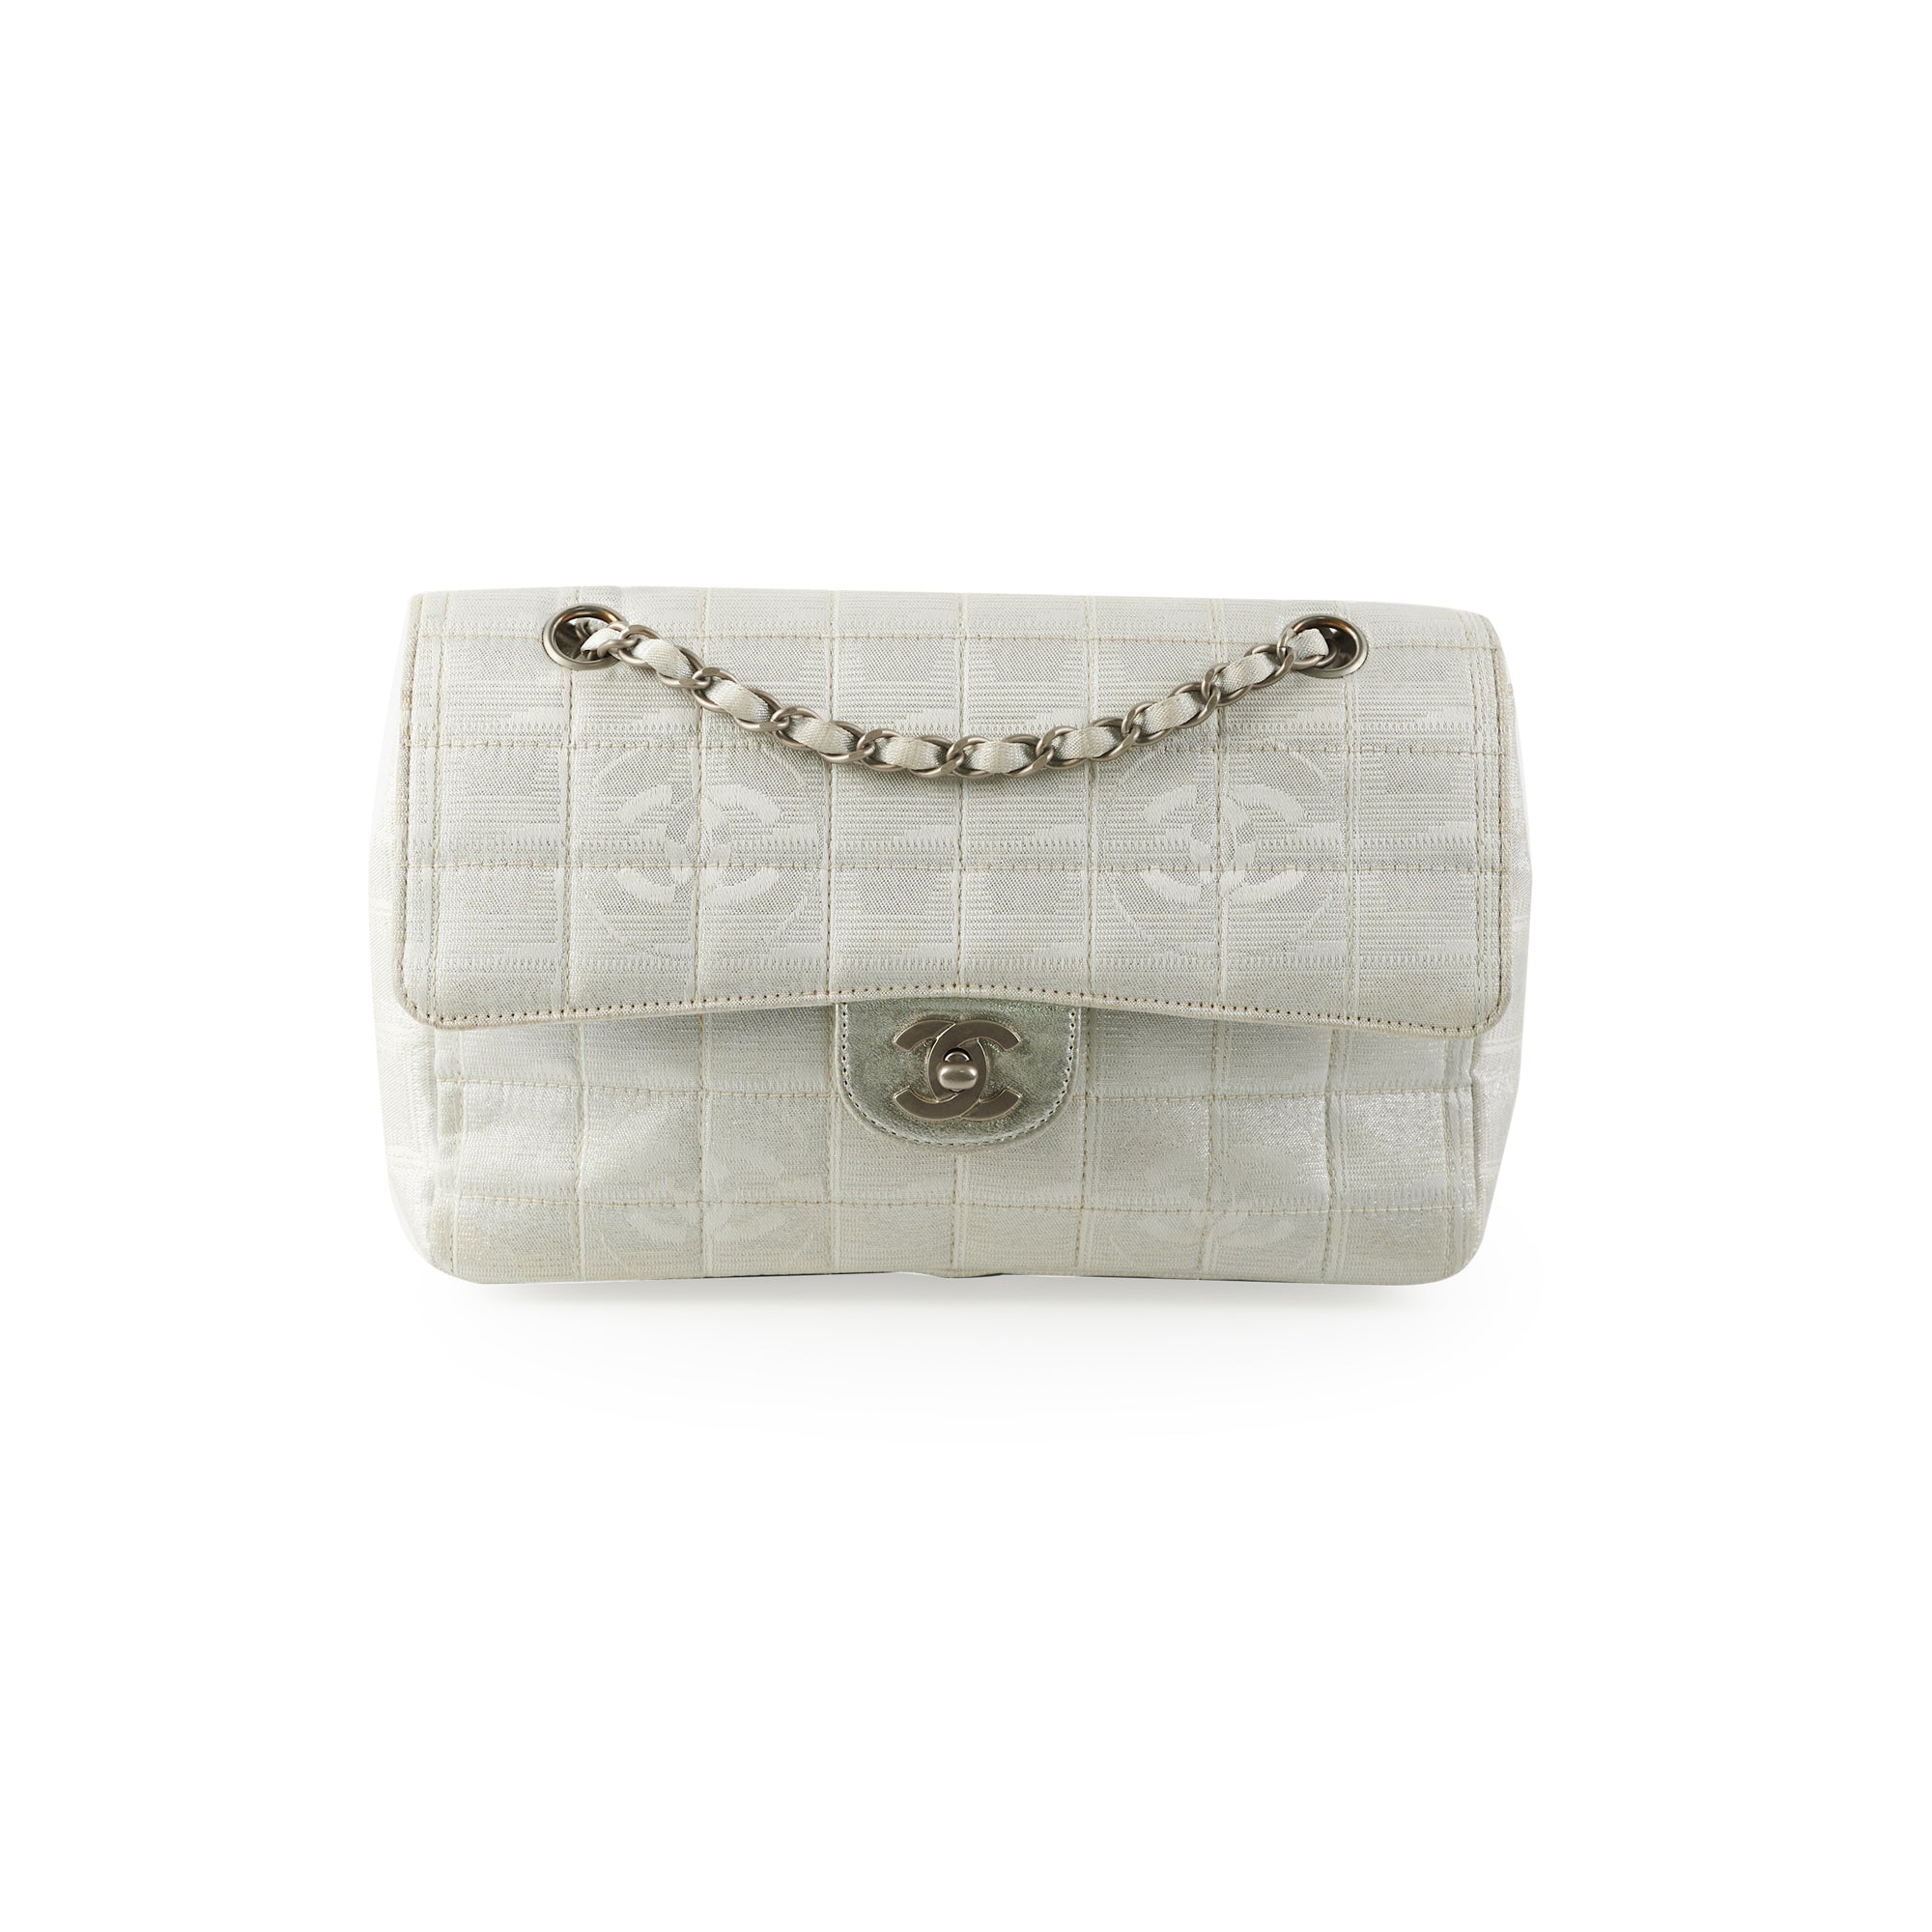 Chanel New Travel Line Chain Shoulder Bag Silver - THE PURSE AFFAIR